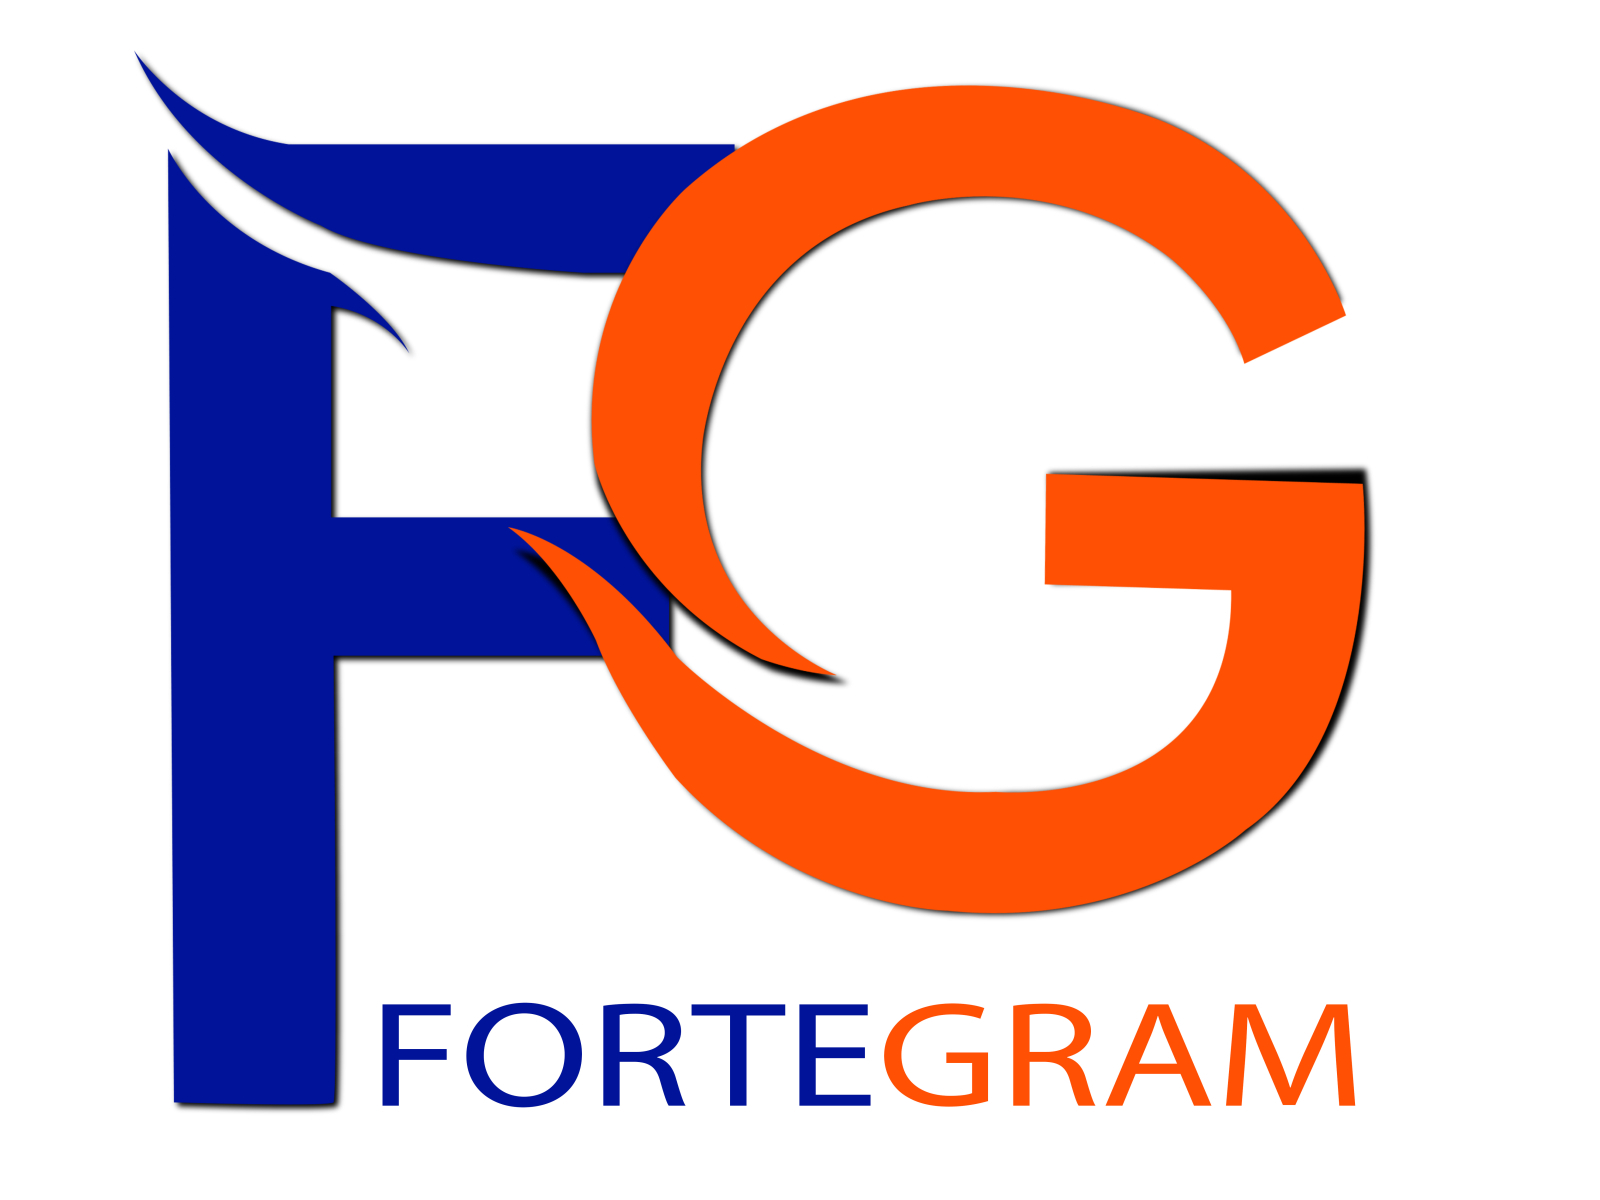 FG logo design by Md Mijubul Islam Khan on Dribbble